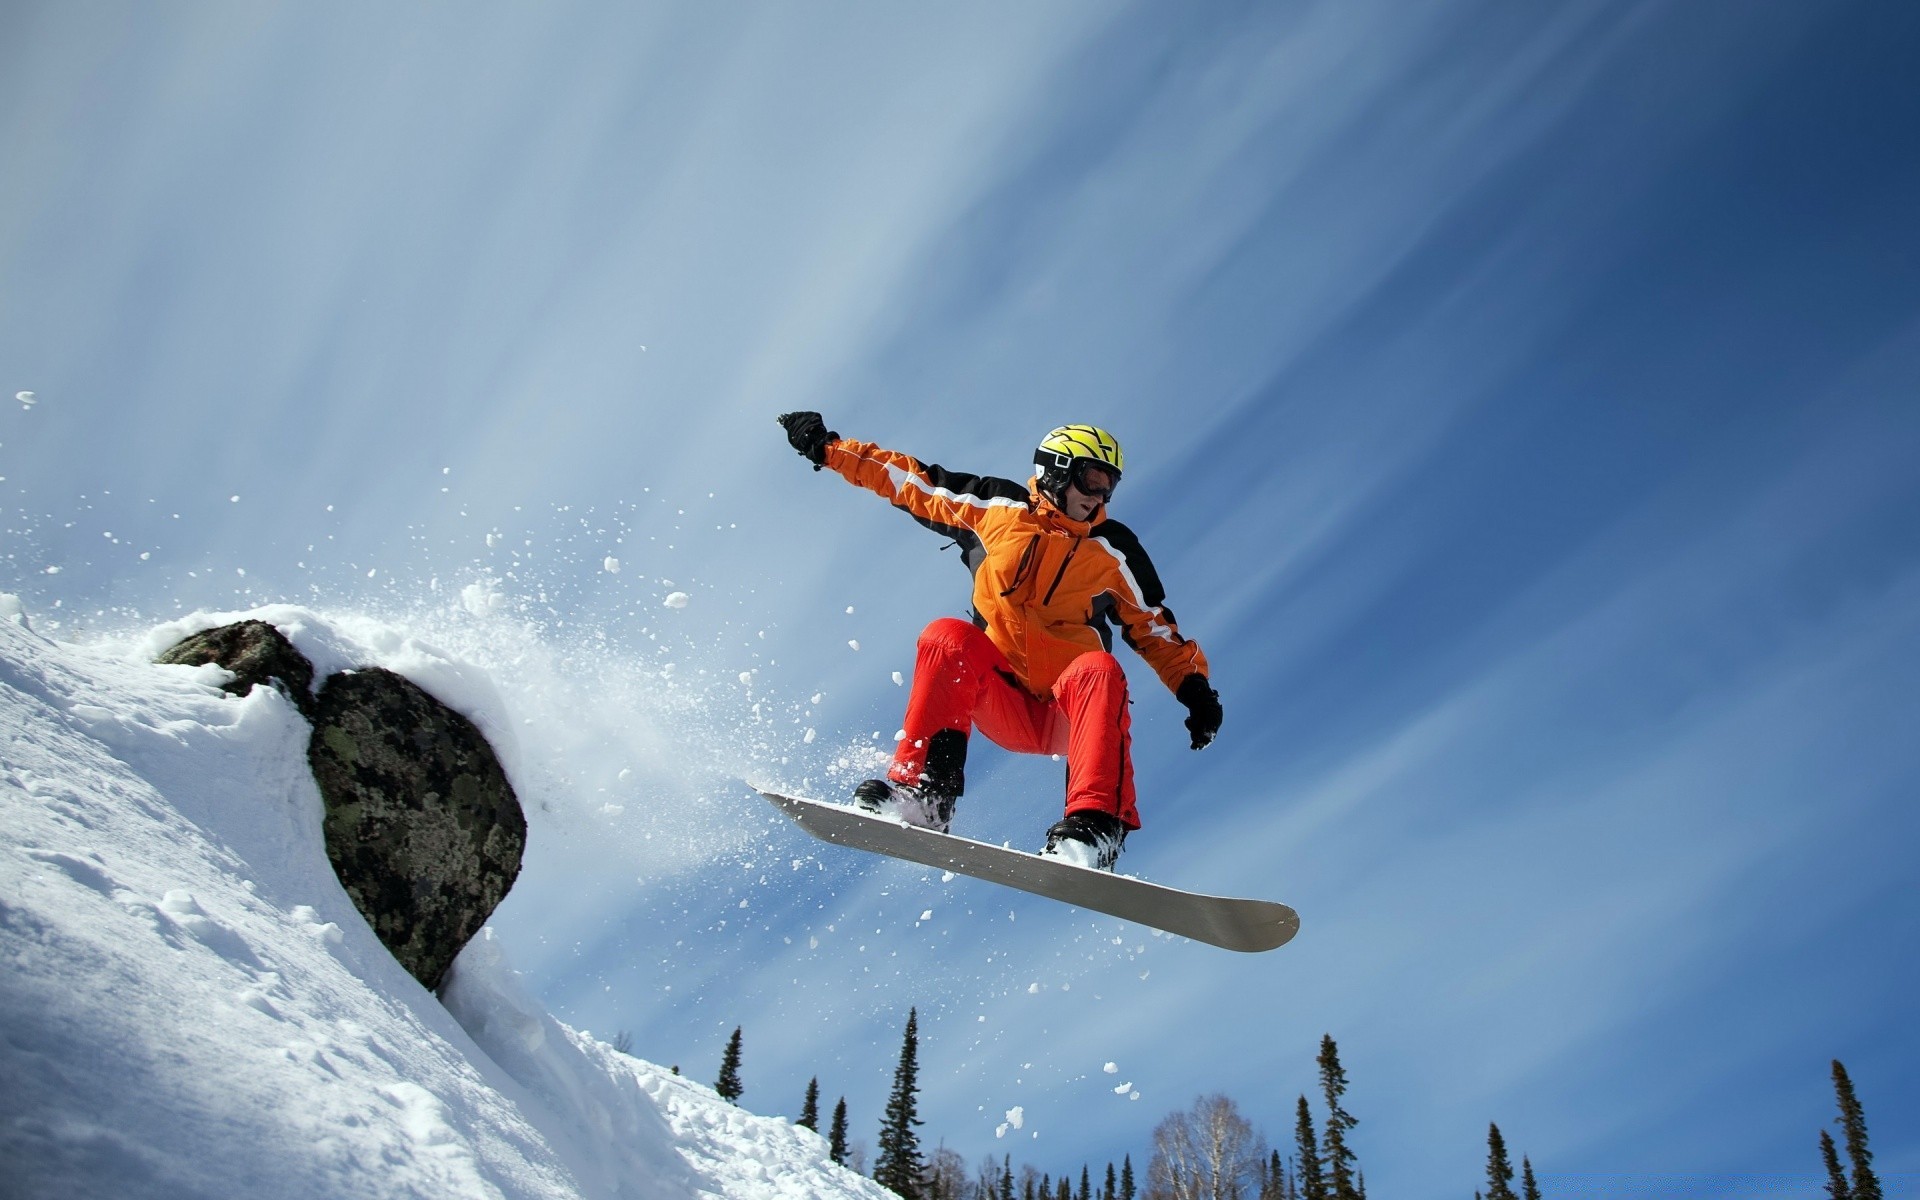 sports snow winter action skier snowboard recreation sports equipment ski resort ice cold